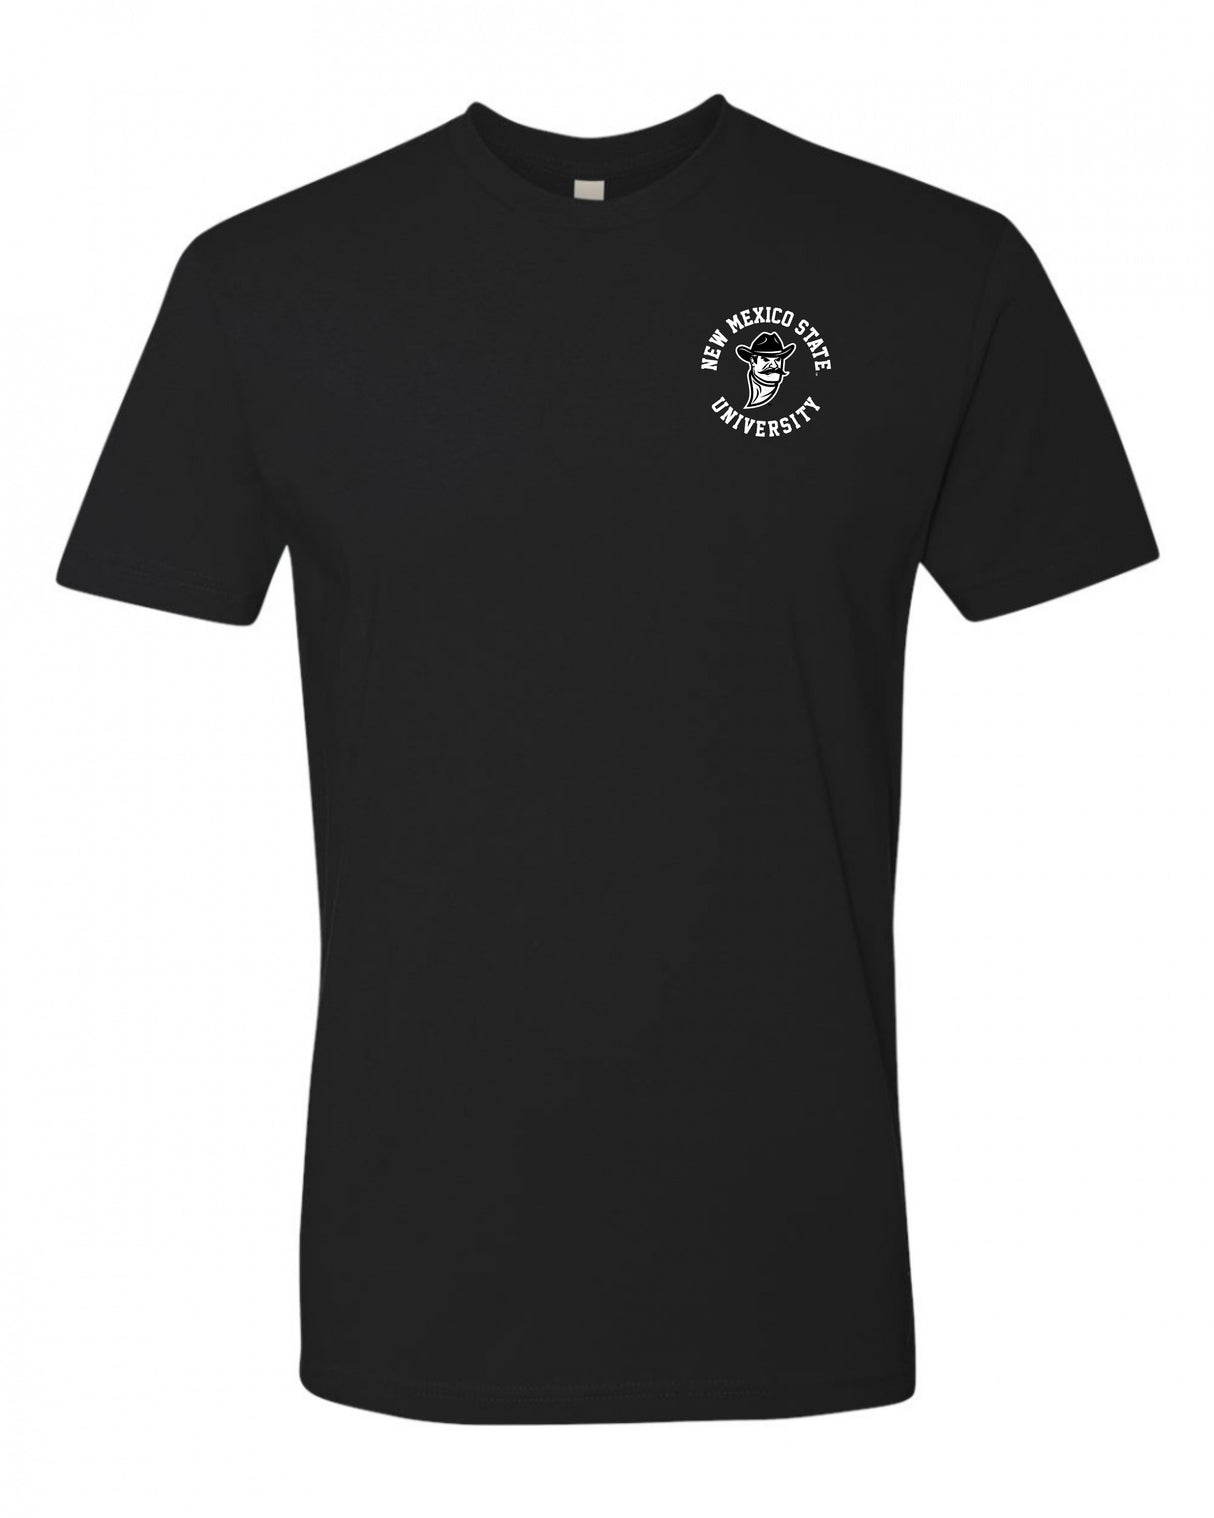 NM State Pete University Pocket T-Shirt